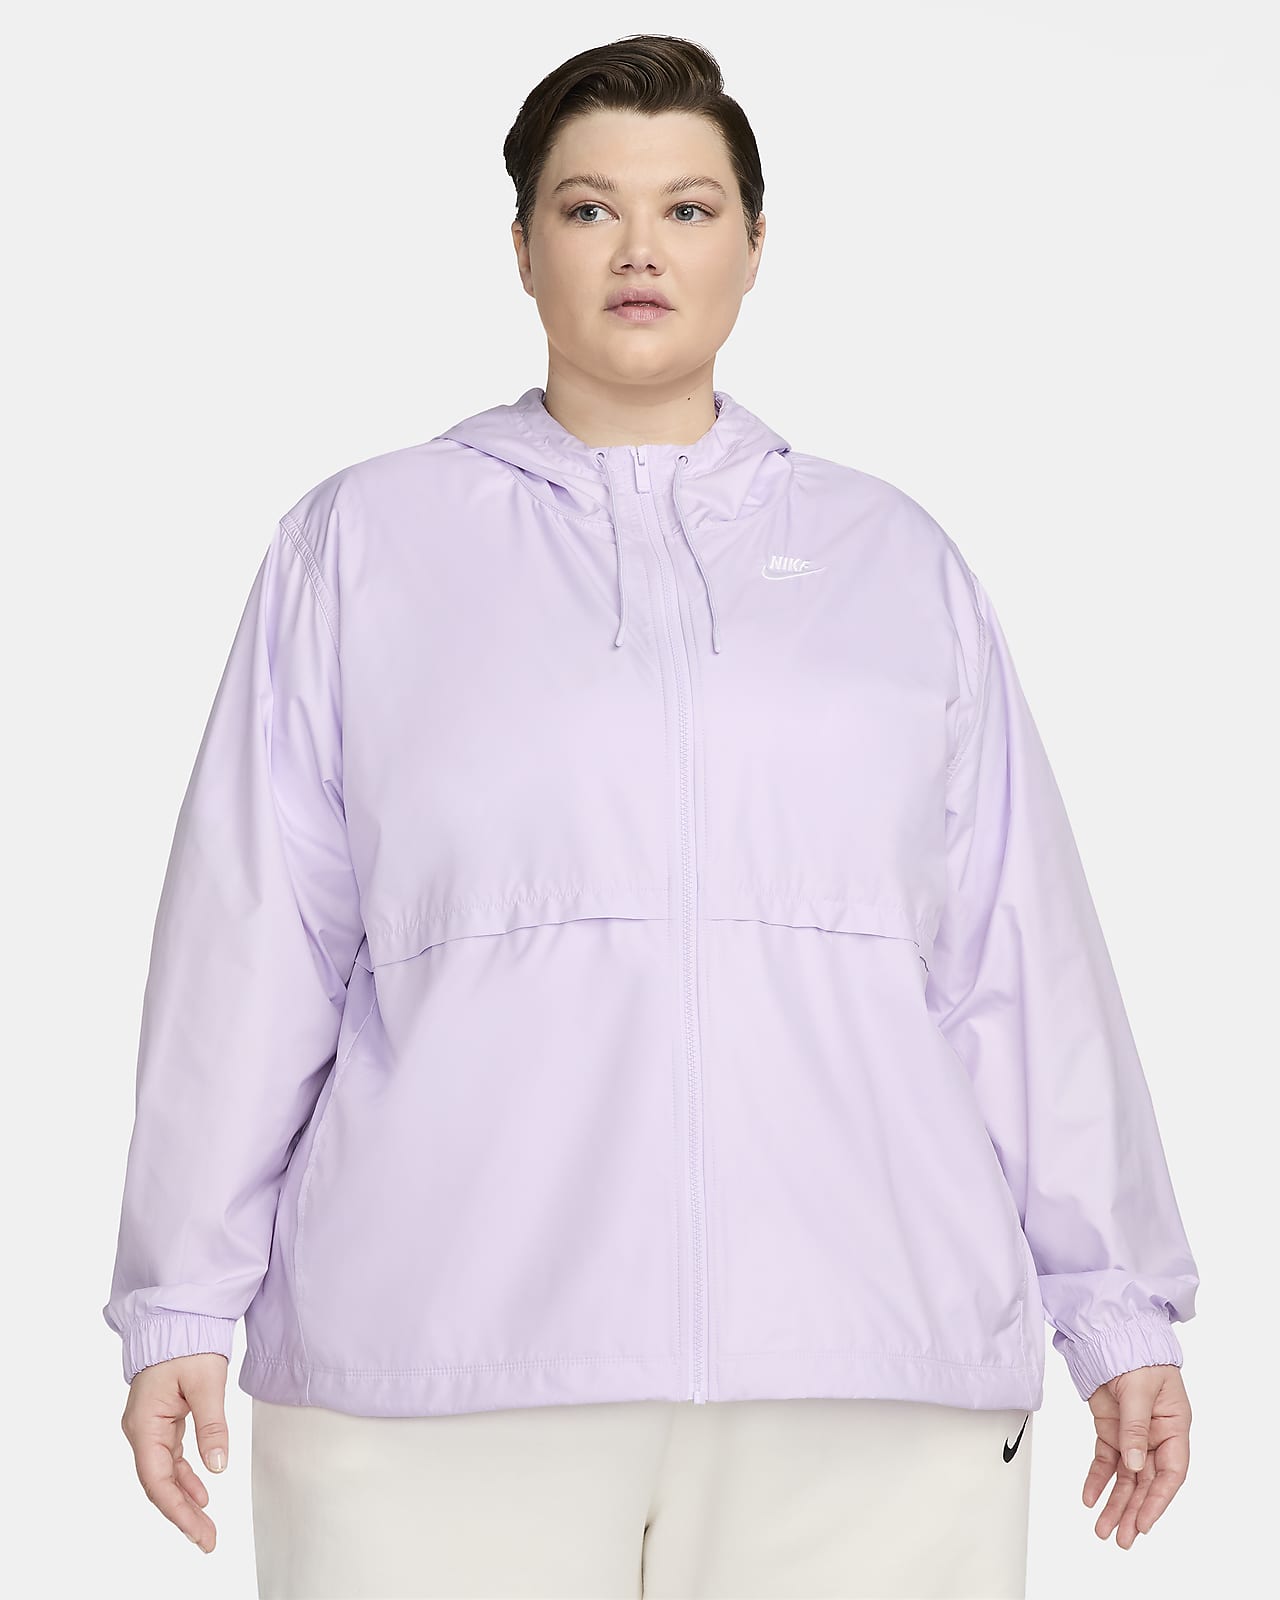 Casaco com capuz Nike Sportswear Repel Women s Woven Jacket 